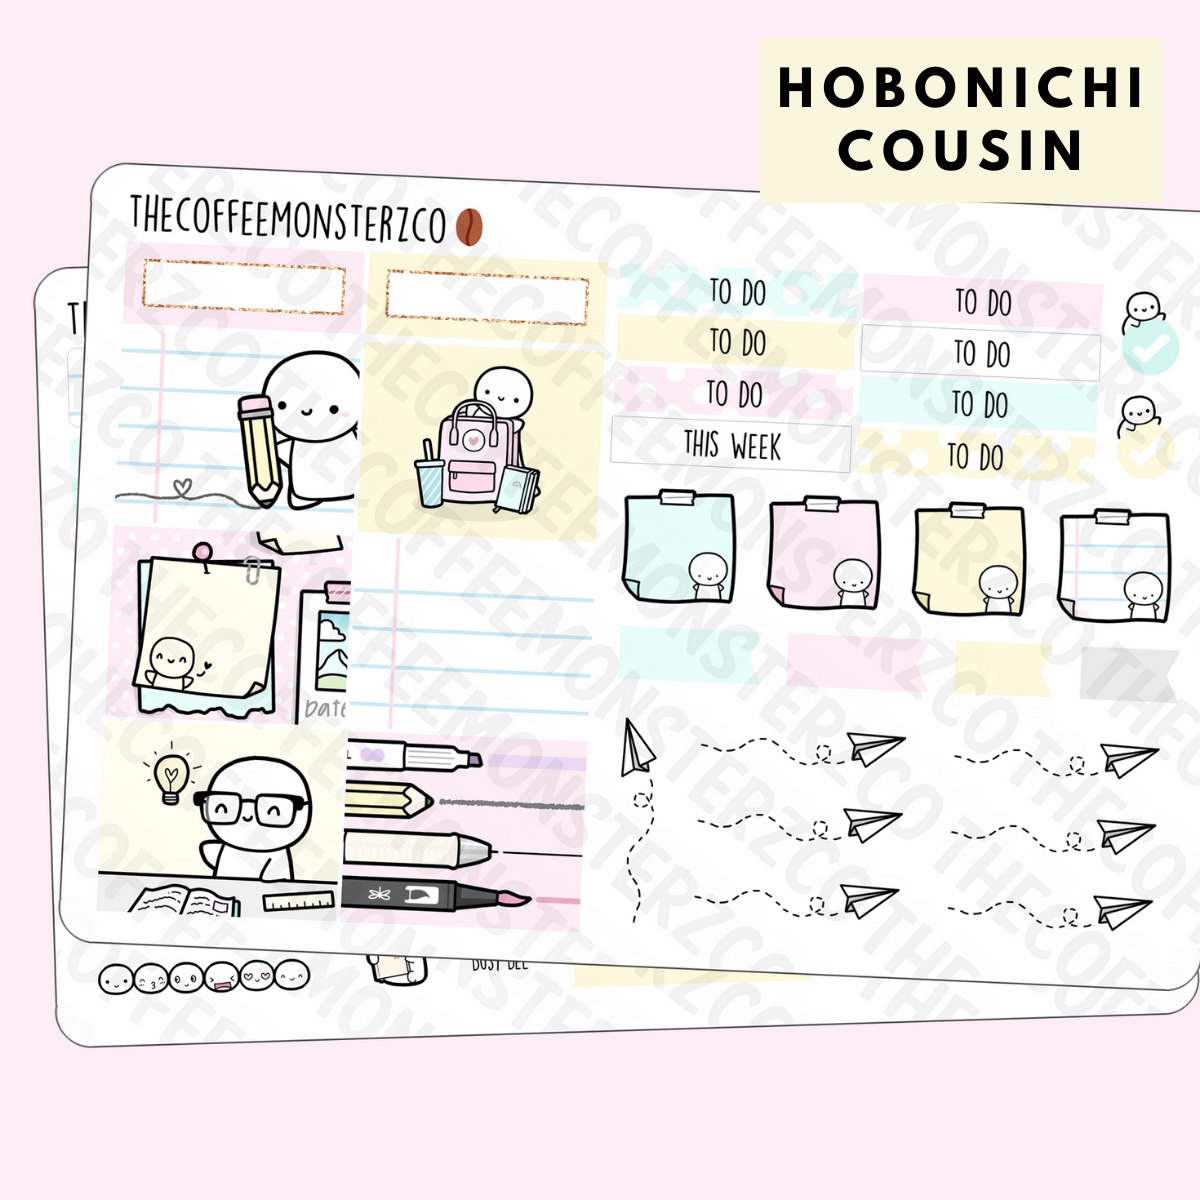 Back To School Hobonichi Cousin Kit – TheCoffeeMonsterzCo